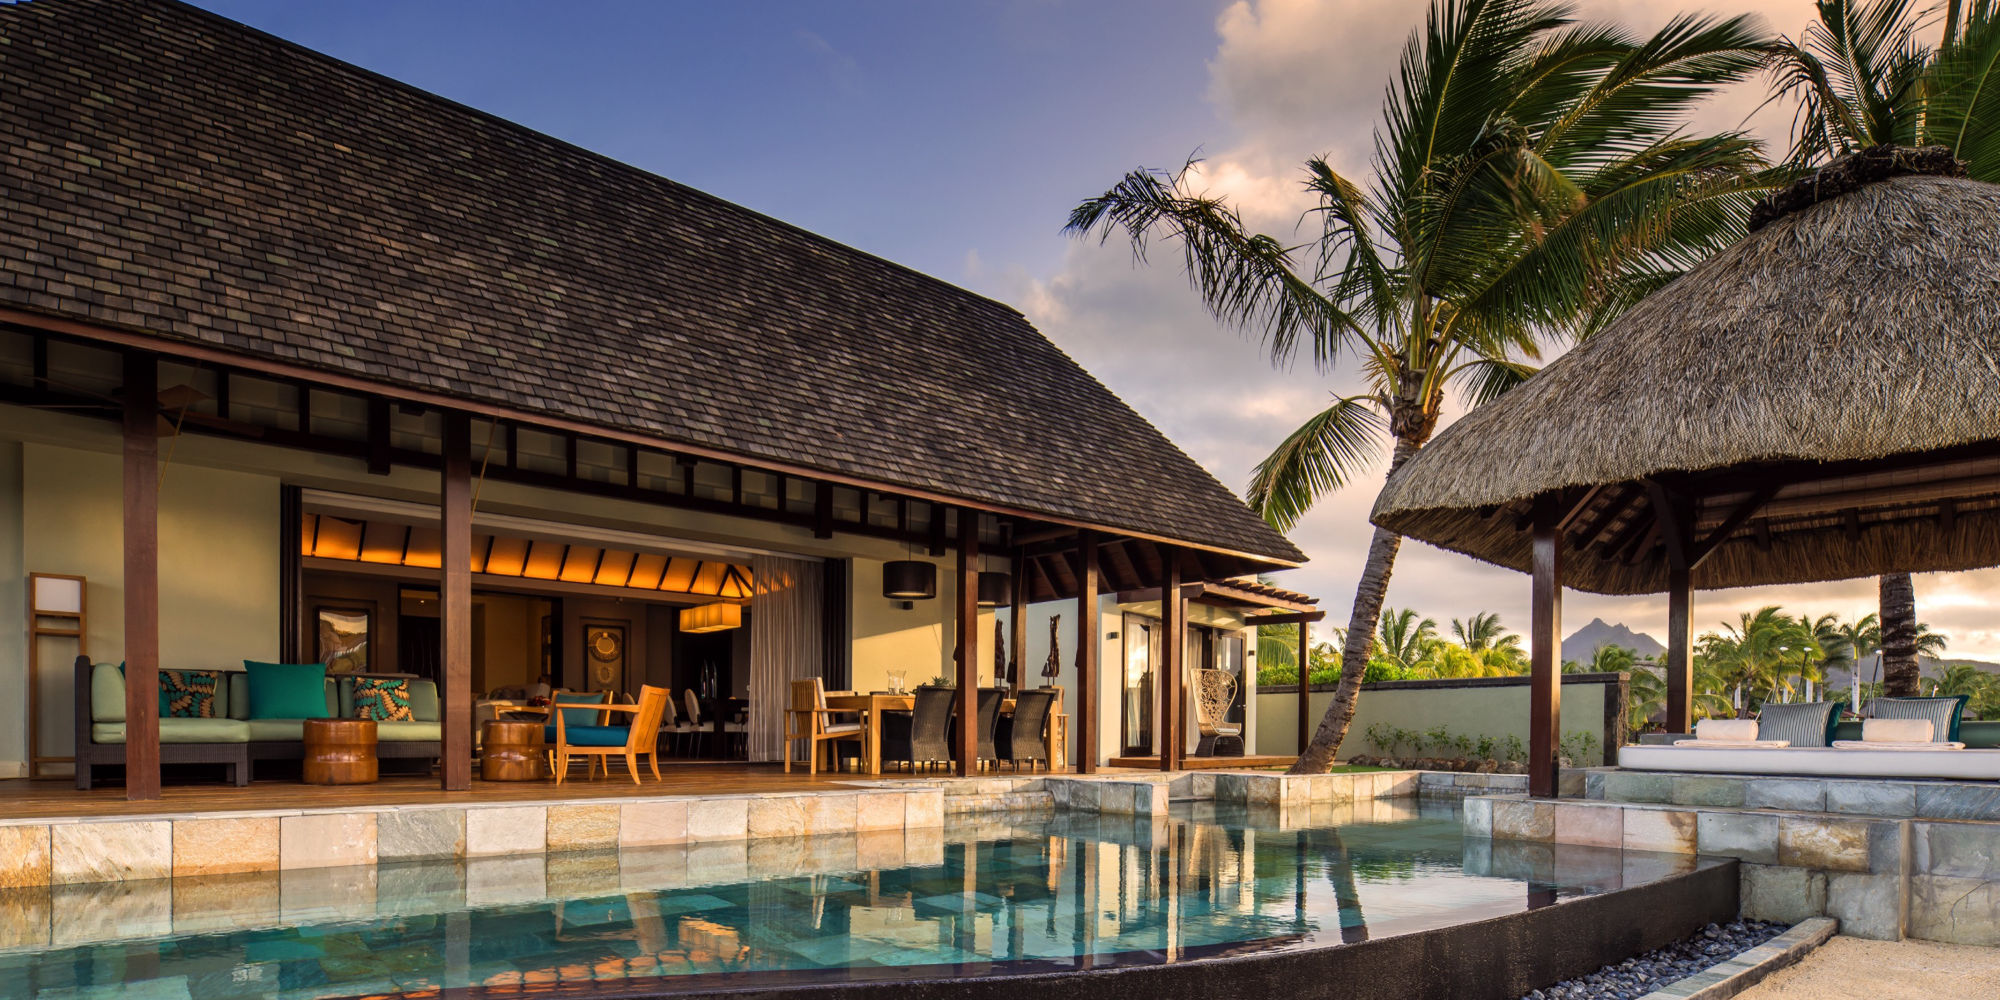 swimming pool four season 5 star hotel mauritius island